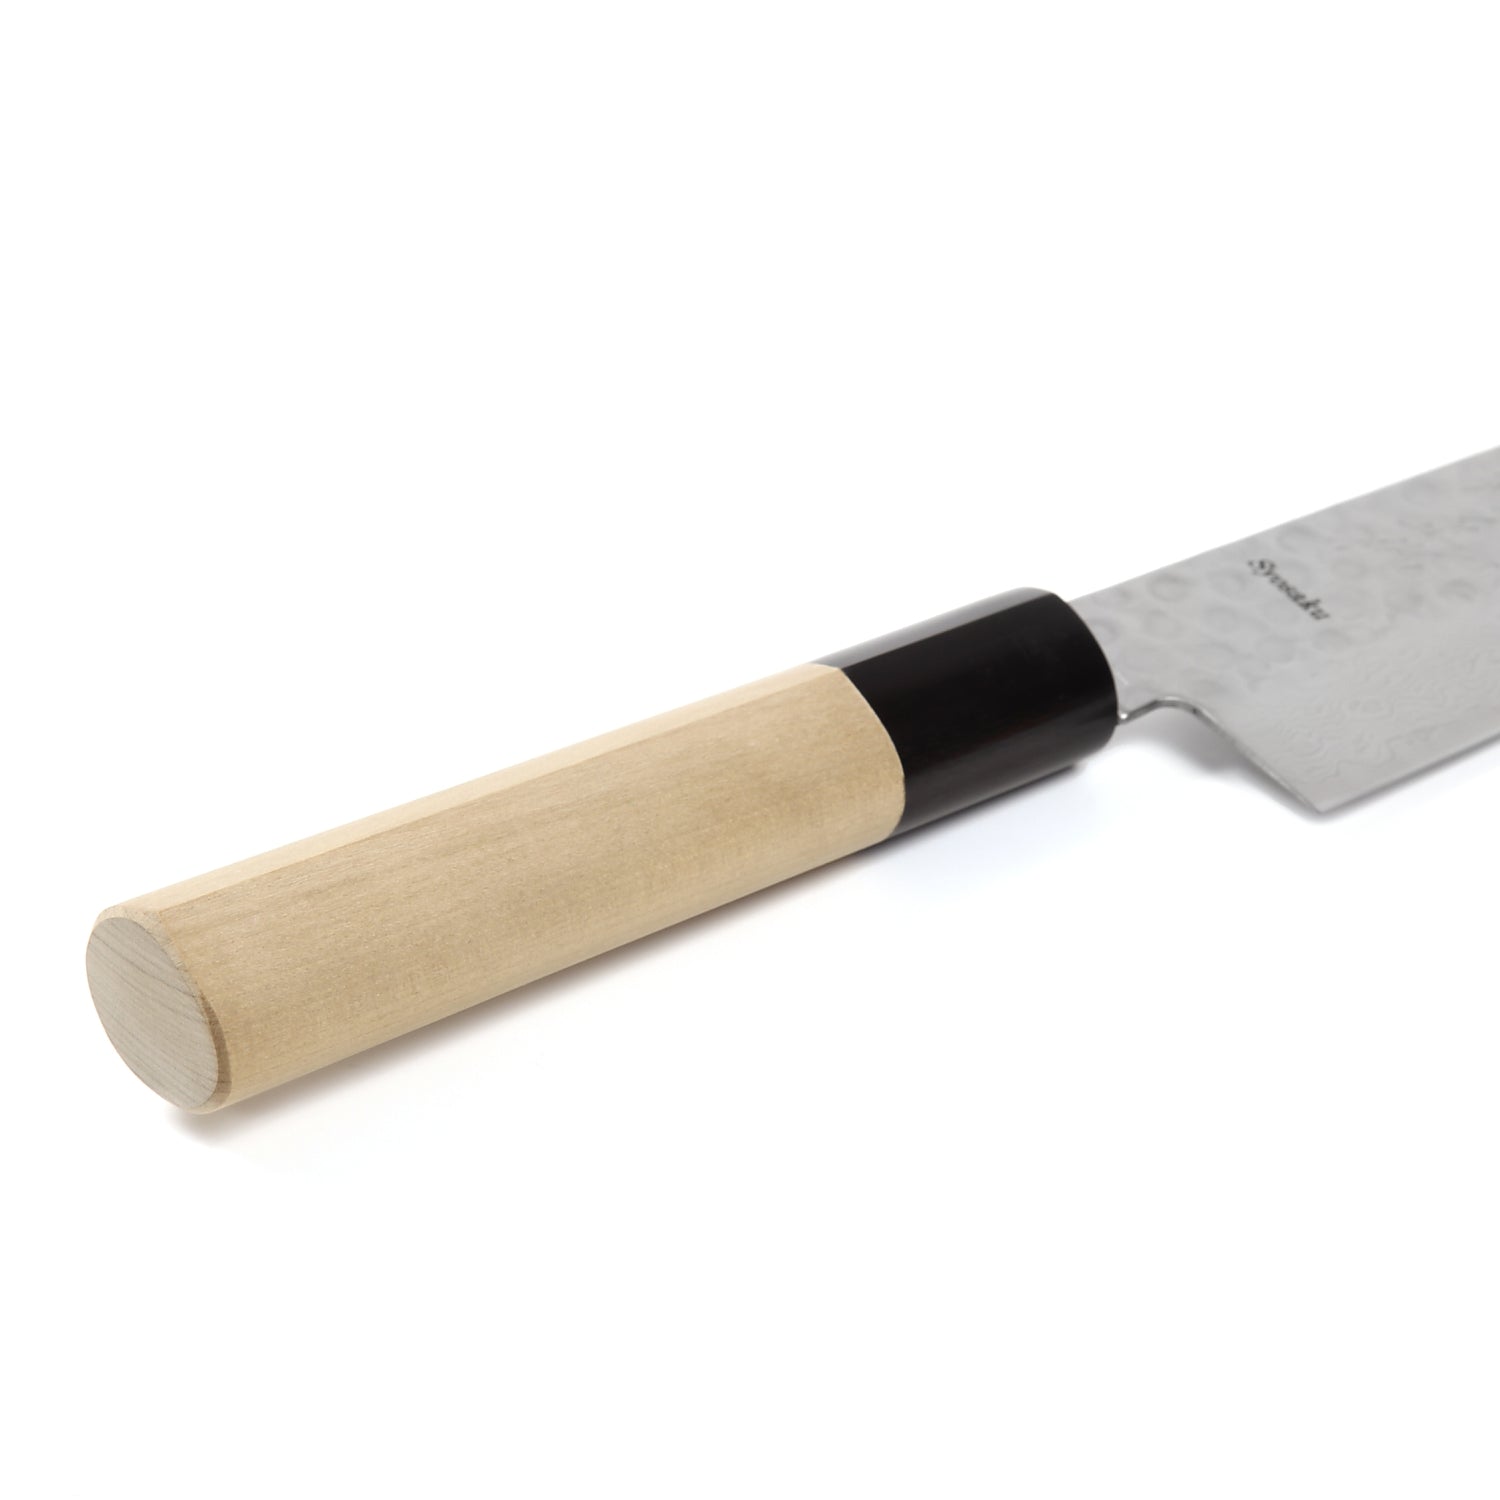 BRODARK Damascus Knife Set 3 PCS With Premium VG10 Damascus Steel,  Ultra-Sharp Professional Japanese Kitchen Knife Set, Full Tang Chef Knife  Set With G10 Handle, Gift Box